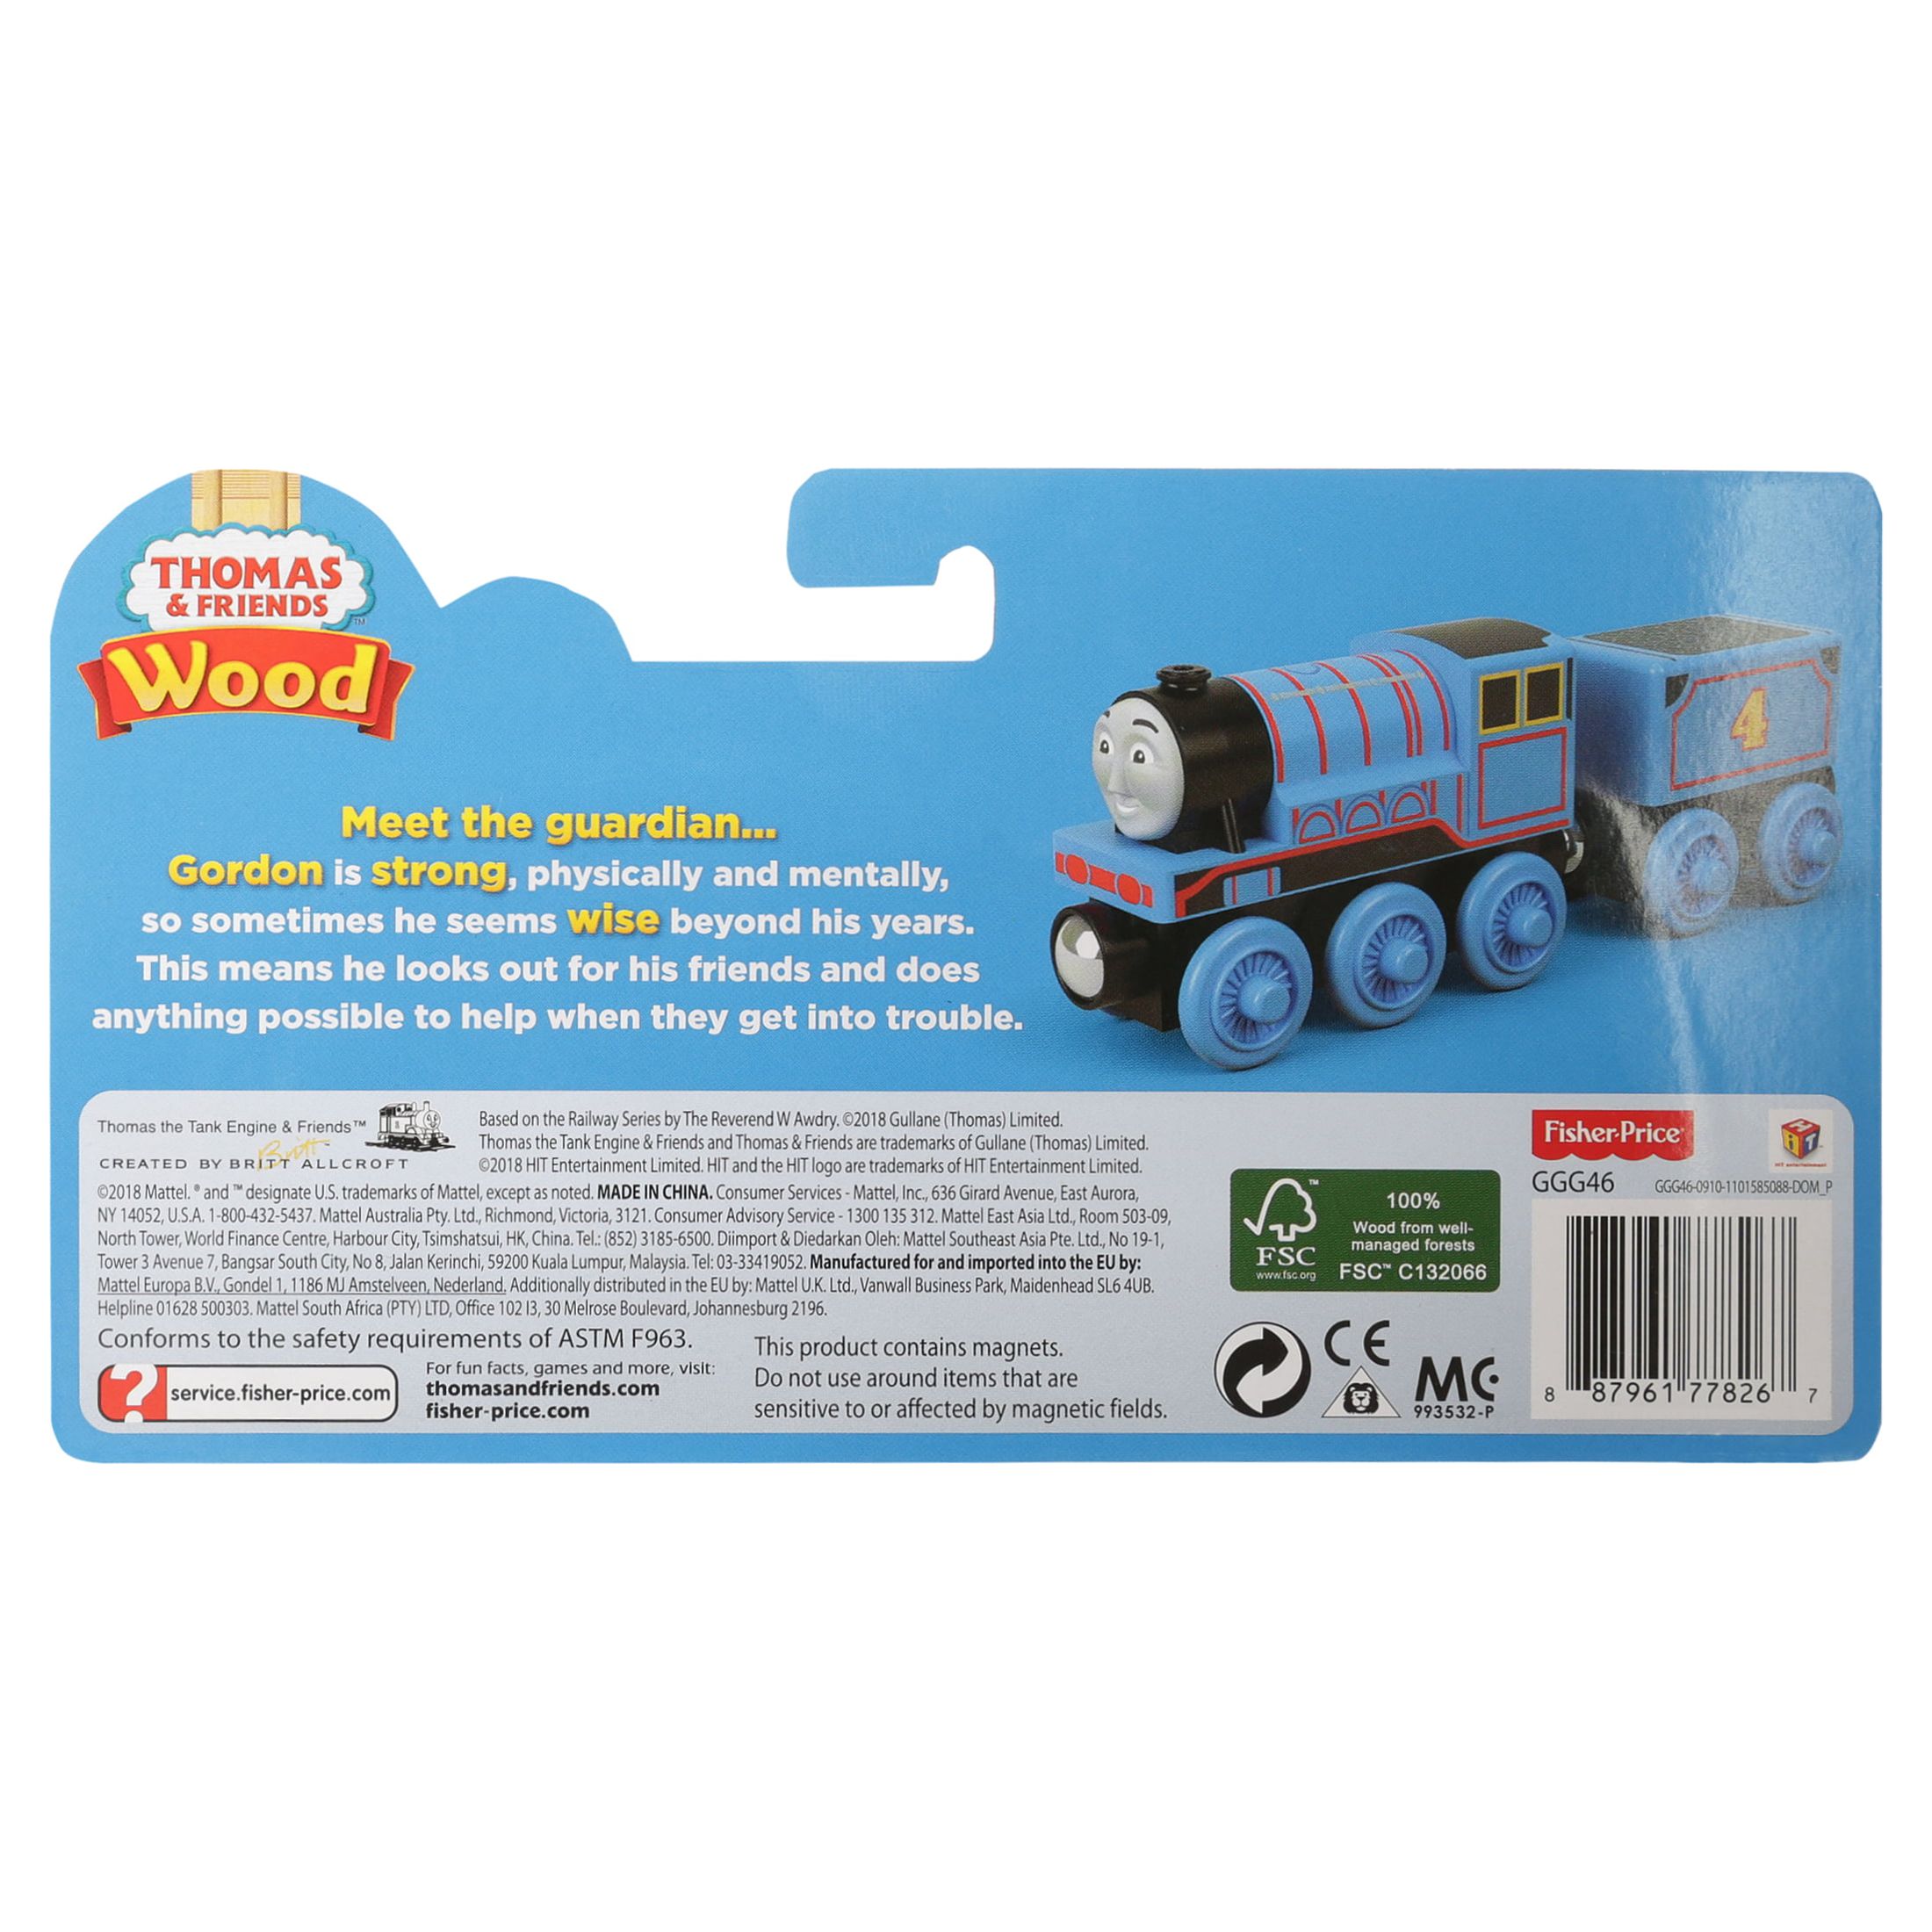 Thomas & Friends Wood Gordon Blue Wooden Tank Engine Train Play Vehicle - image 5 of 9